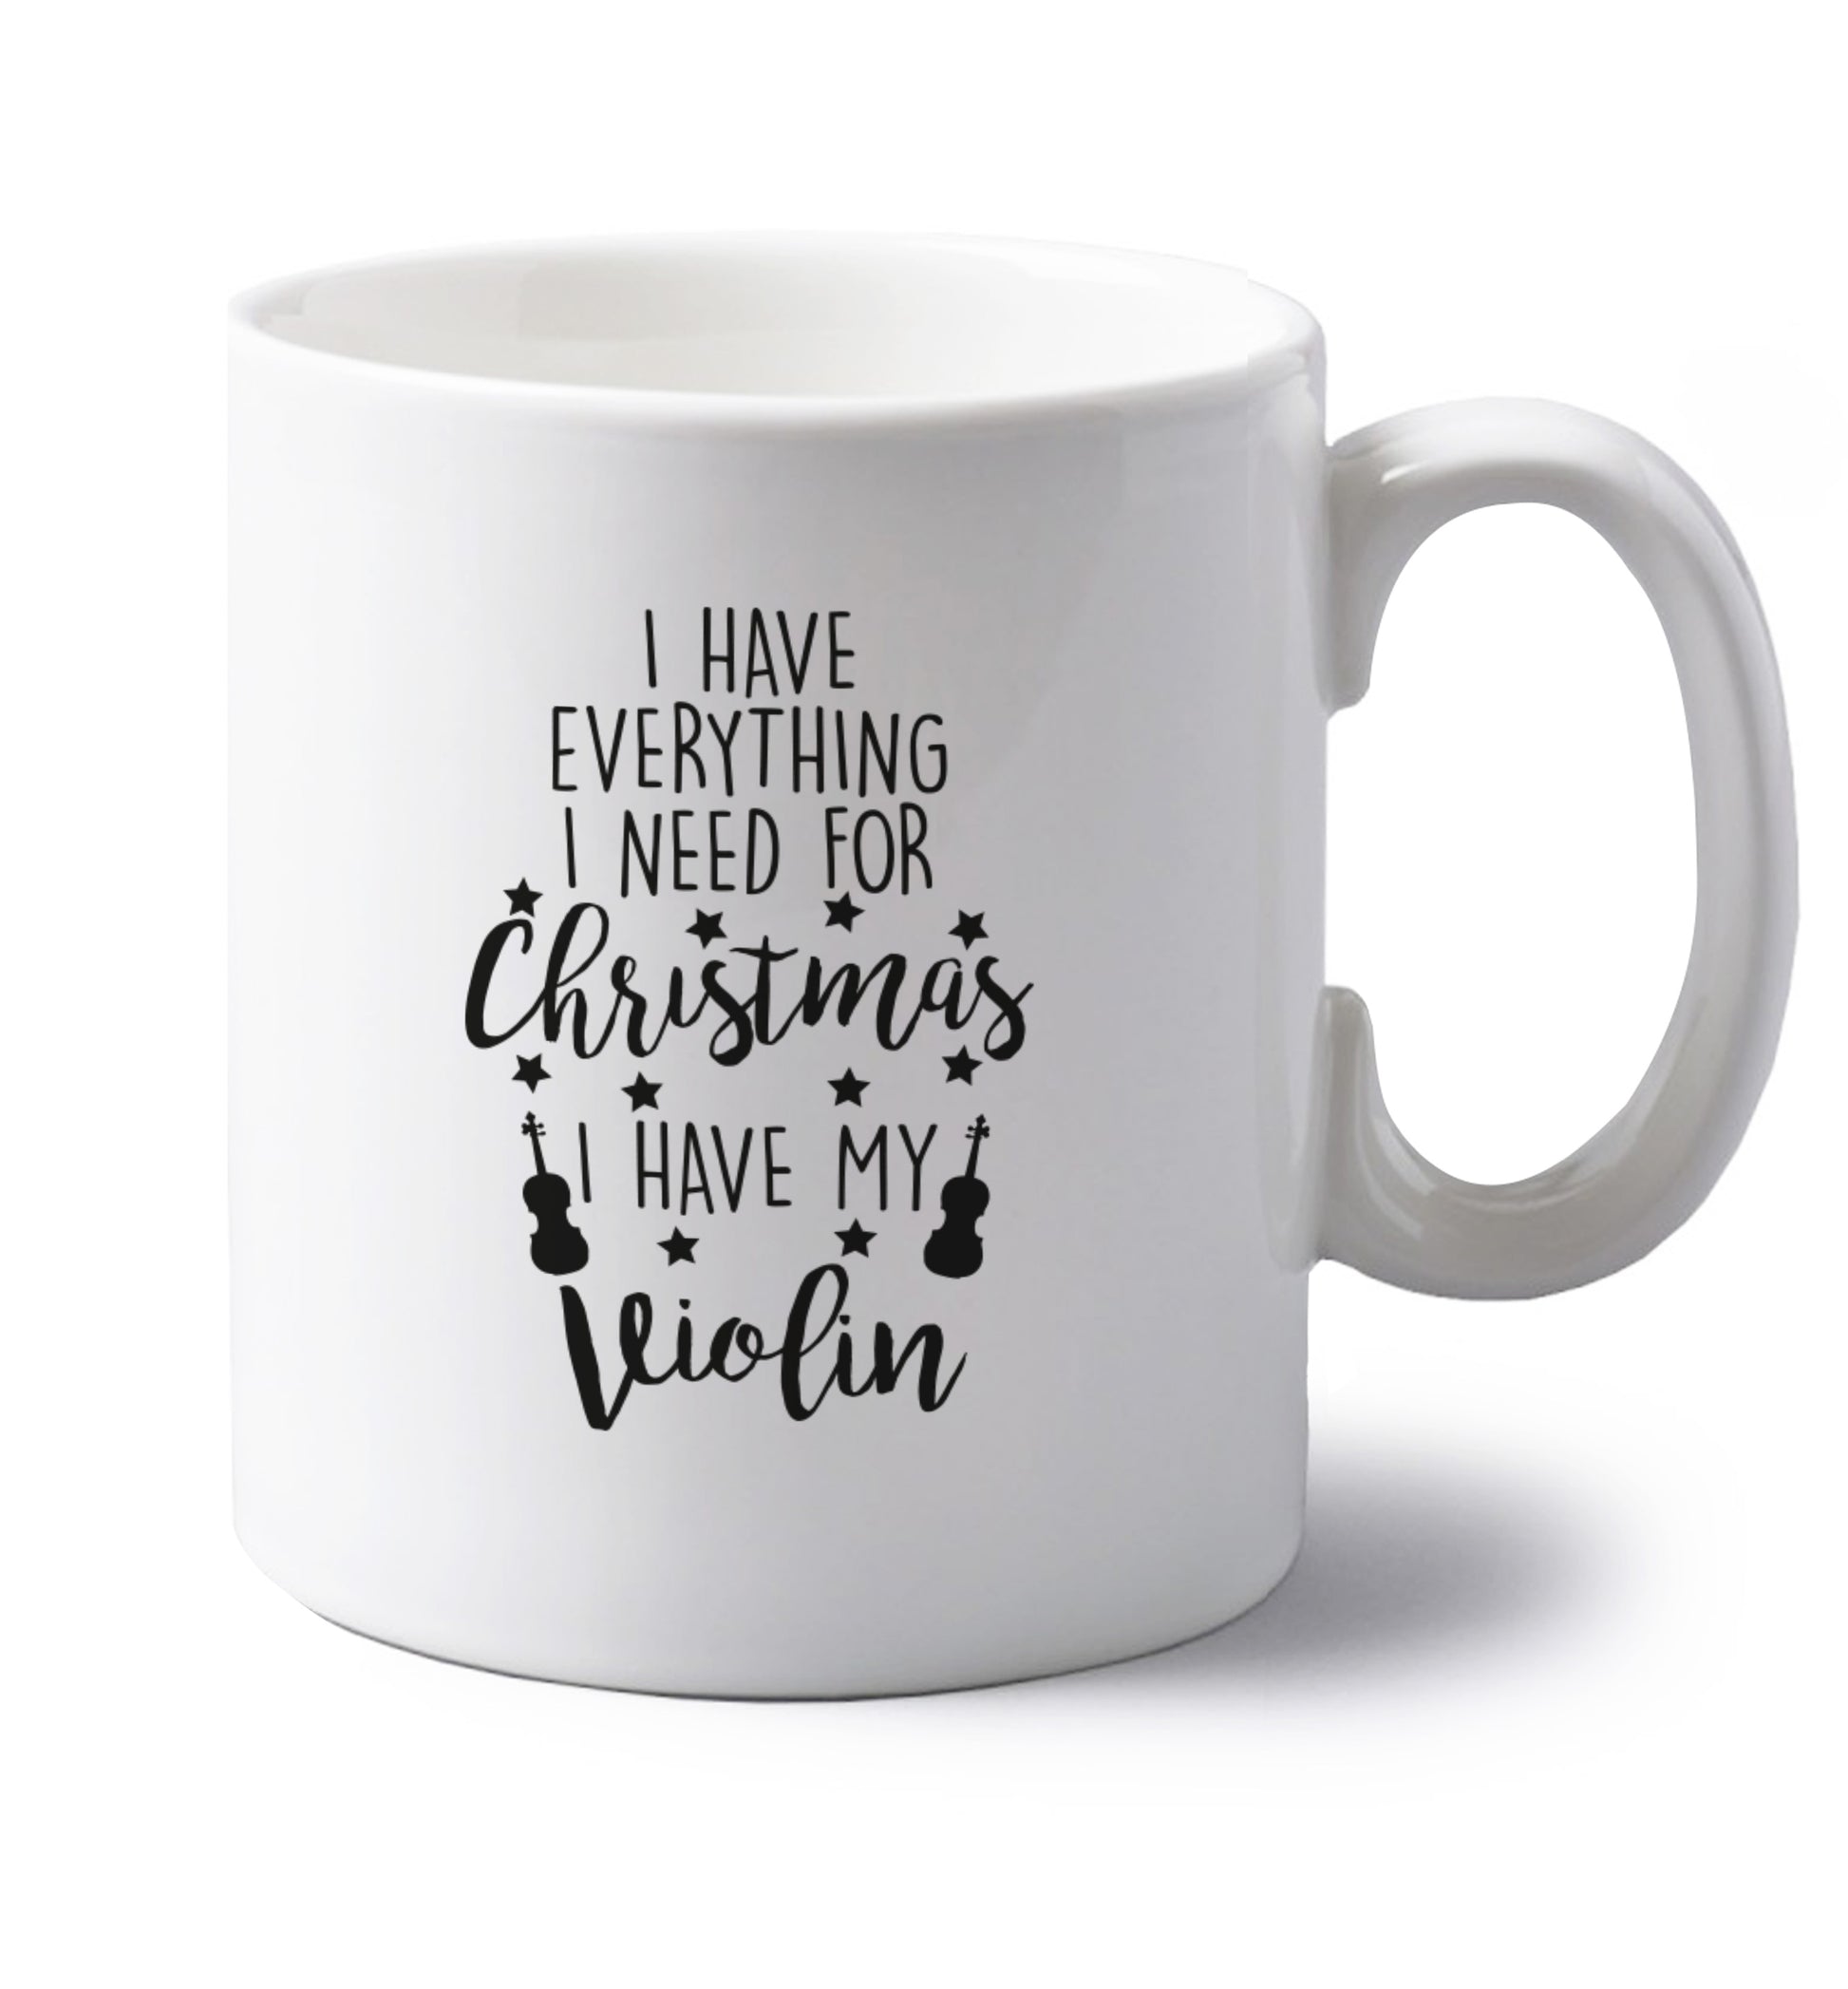 I have everything I need for Christmas I have my violin left handed white ceramic mug 